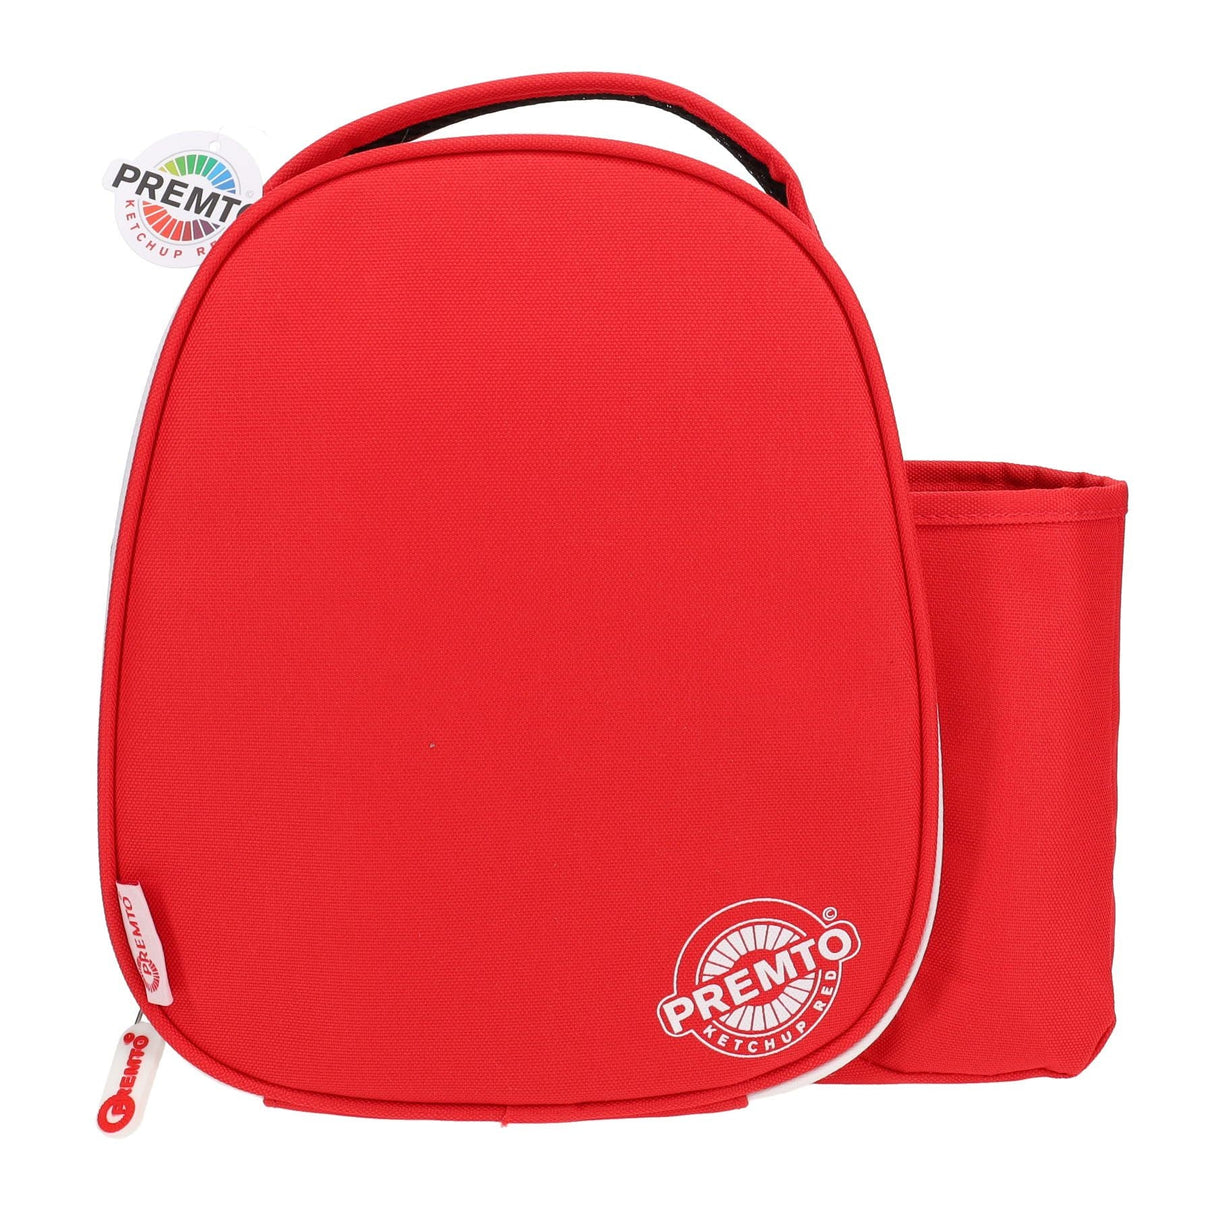 Premto Lunch Bag - Ketchup Red-Lunch Boxes-Premto|StationeryShop.co.uk